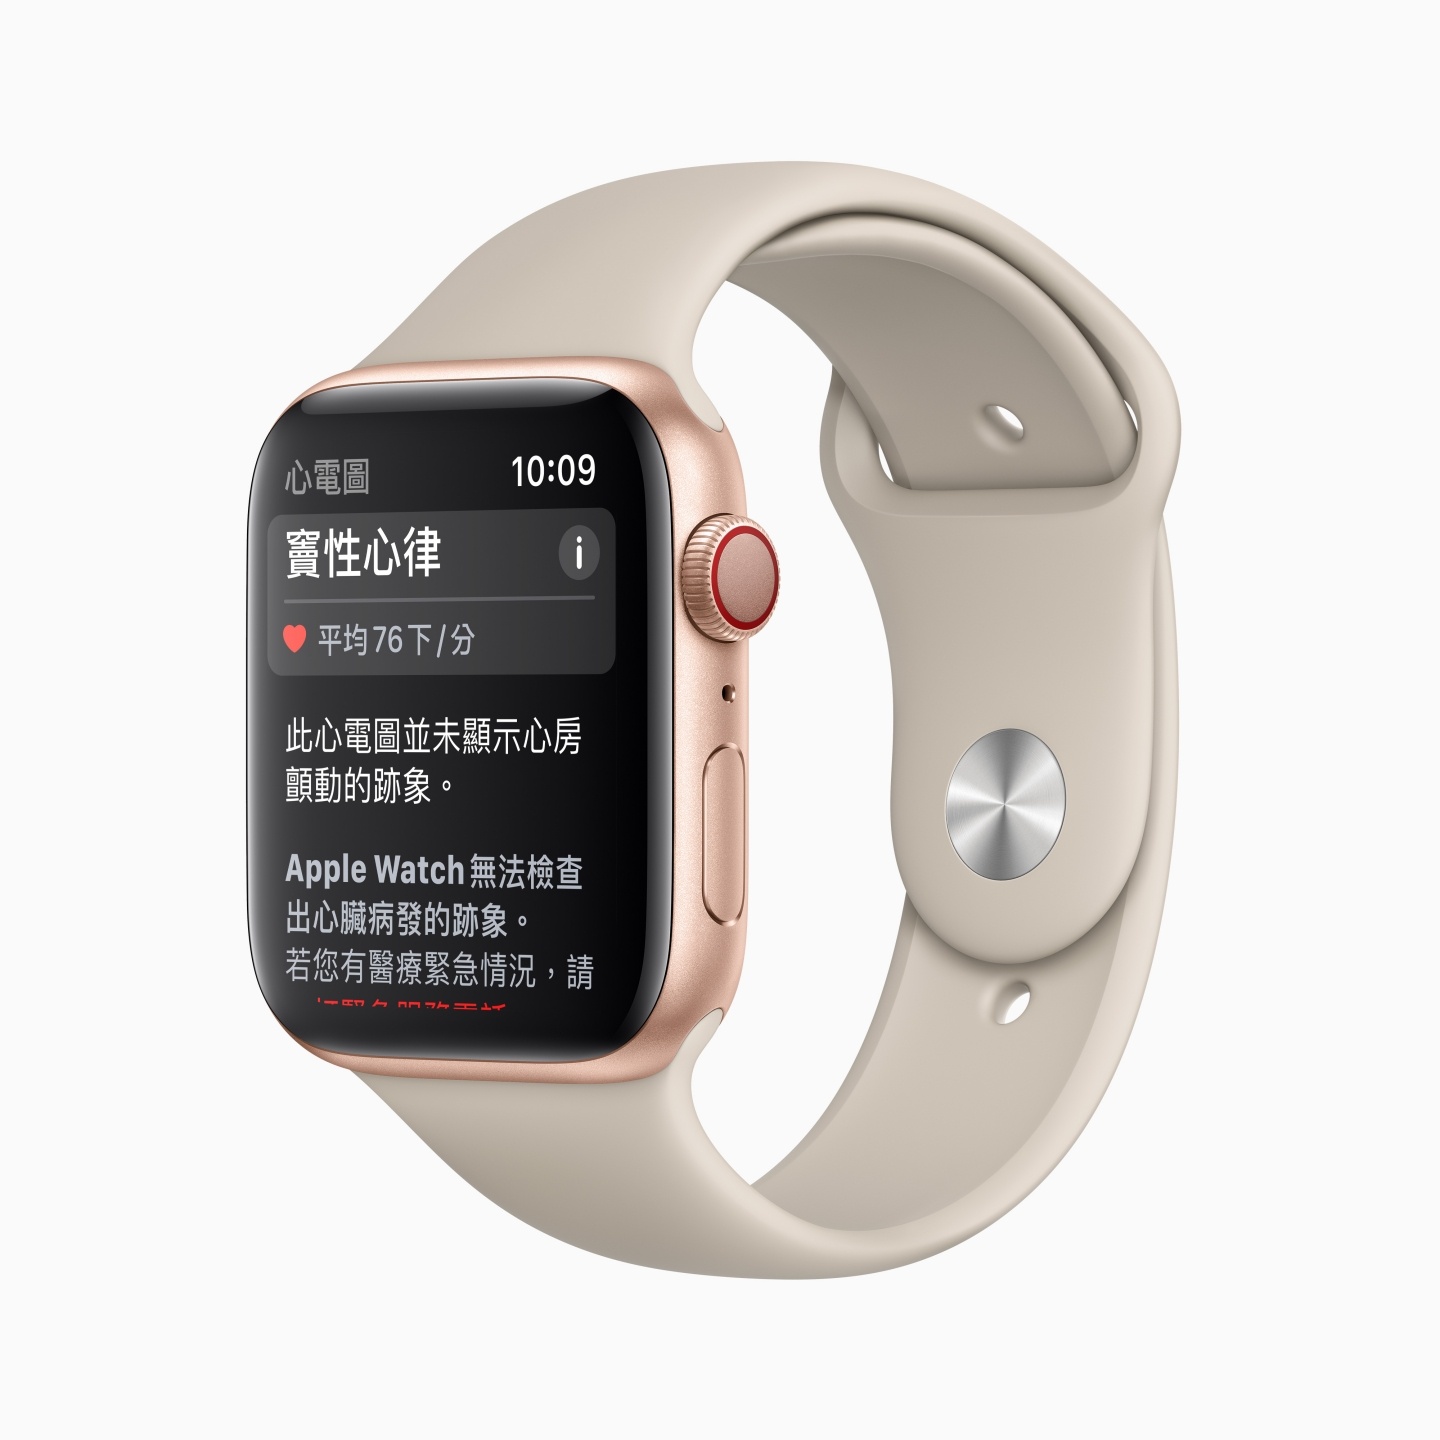 Apple Watch ECG 心電圖功能可以用啦！台灣 12 月 15 日正式開放